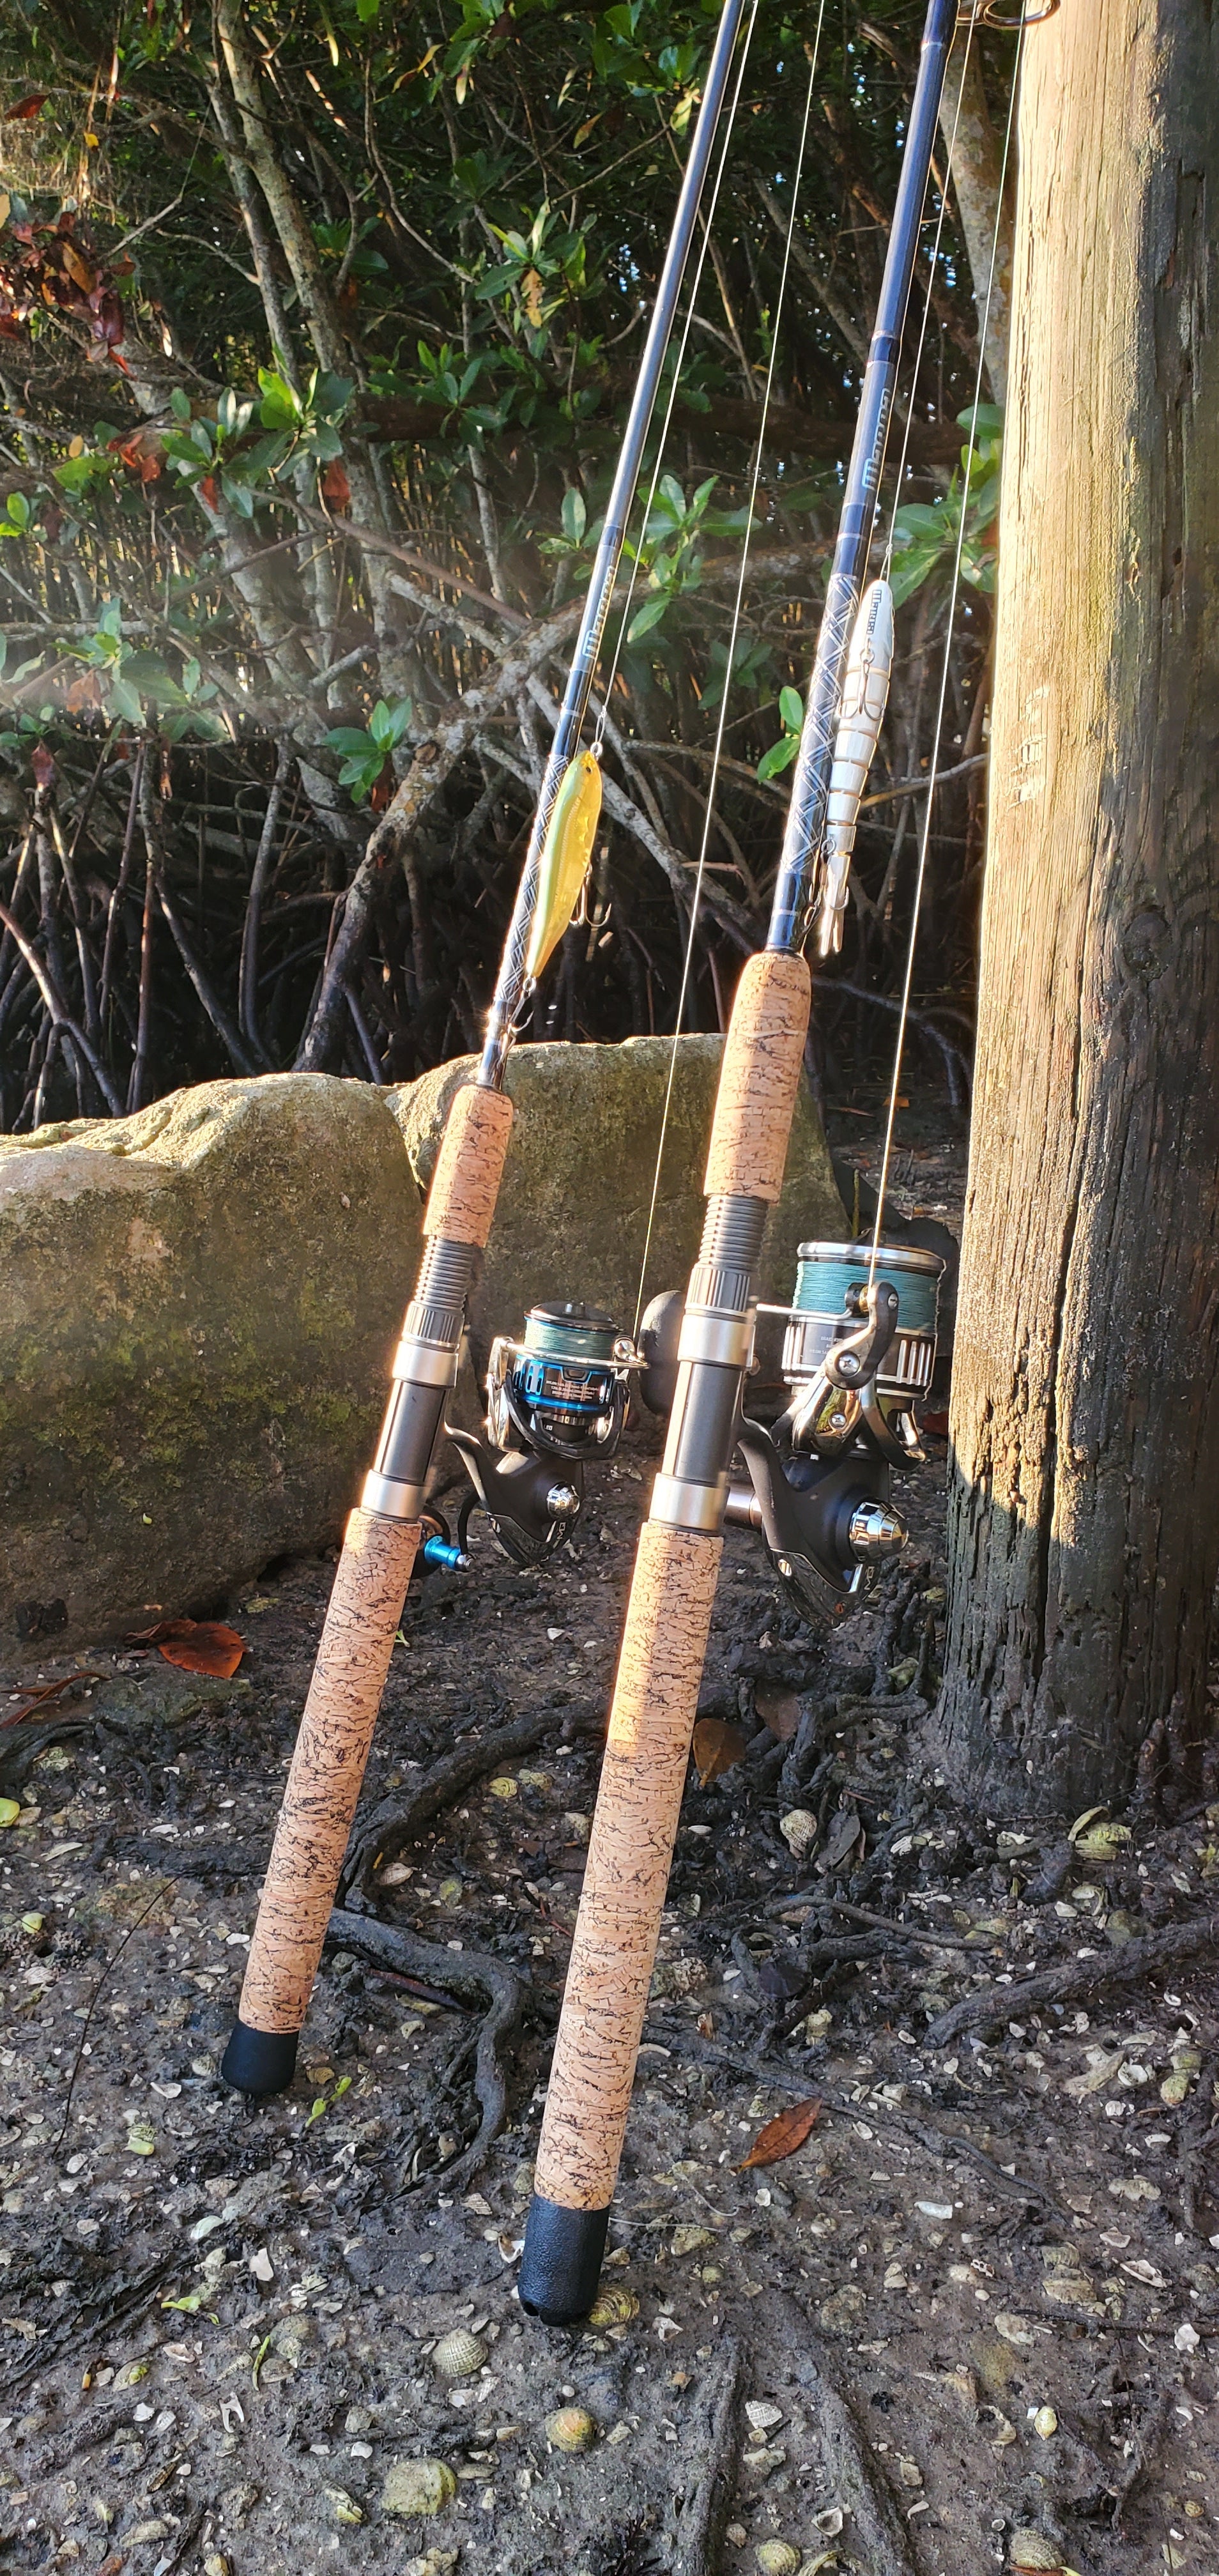 Fishing Rods